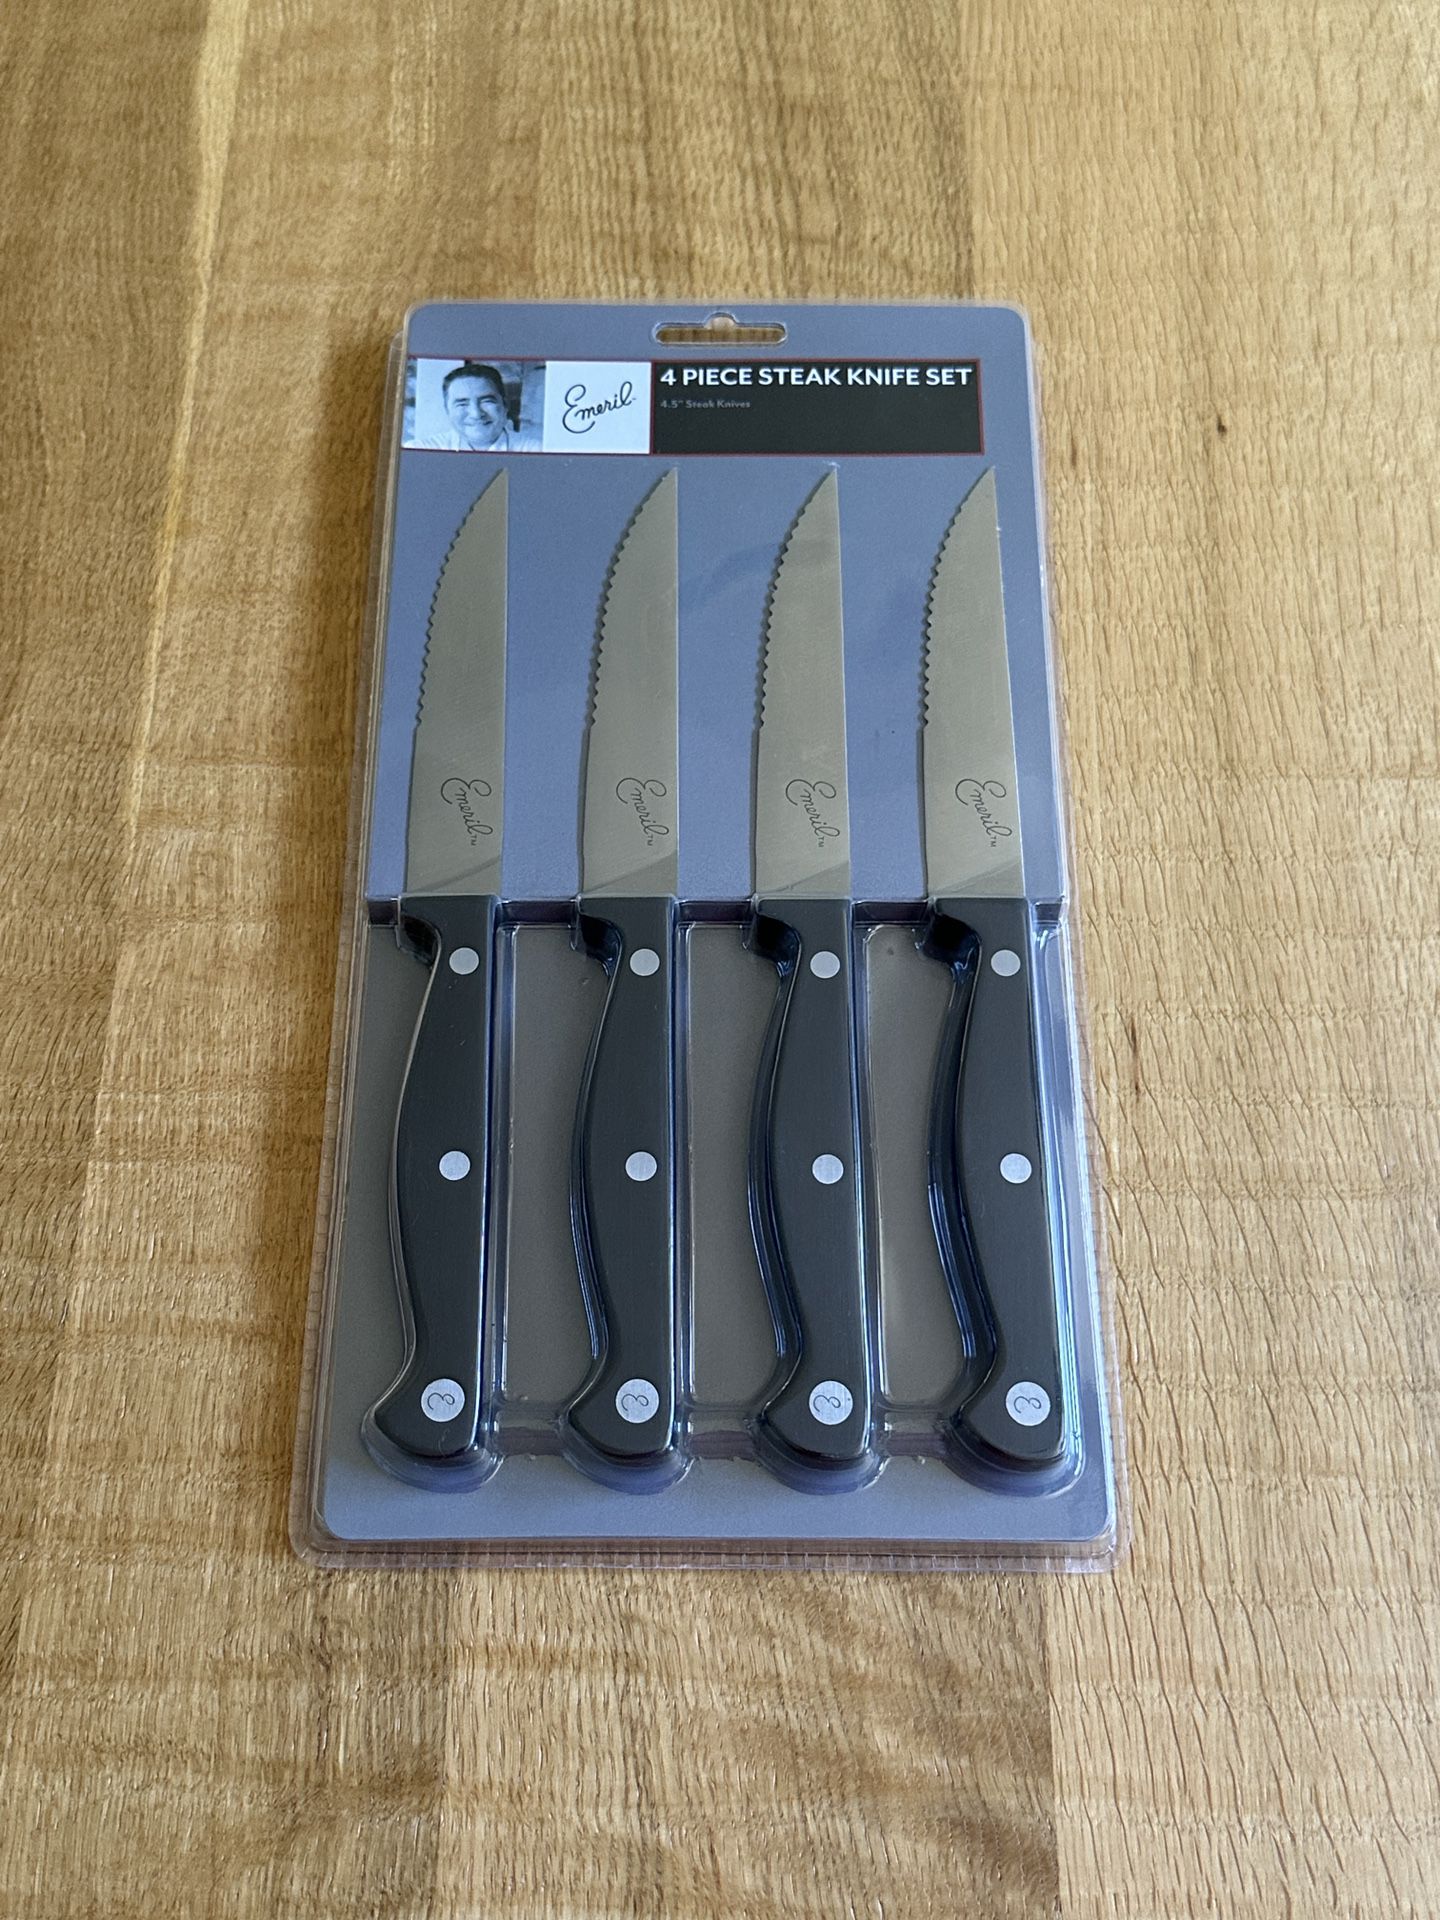 Emeril 4-Pc Steak Knife Set (NEW) for Sale in Sacramento, CA - OfferUp